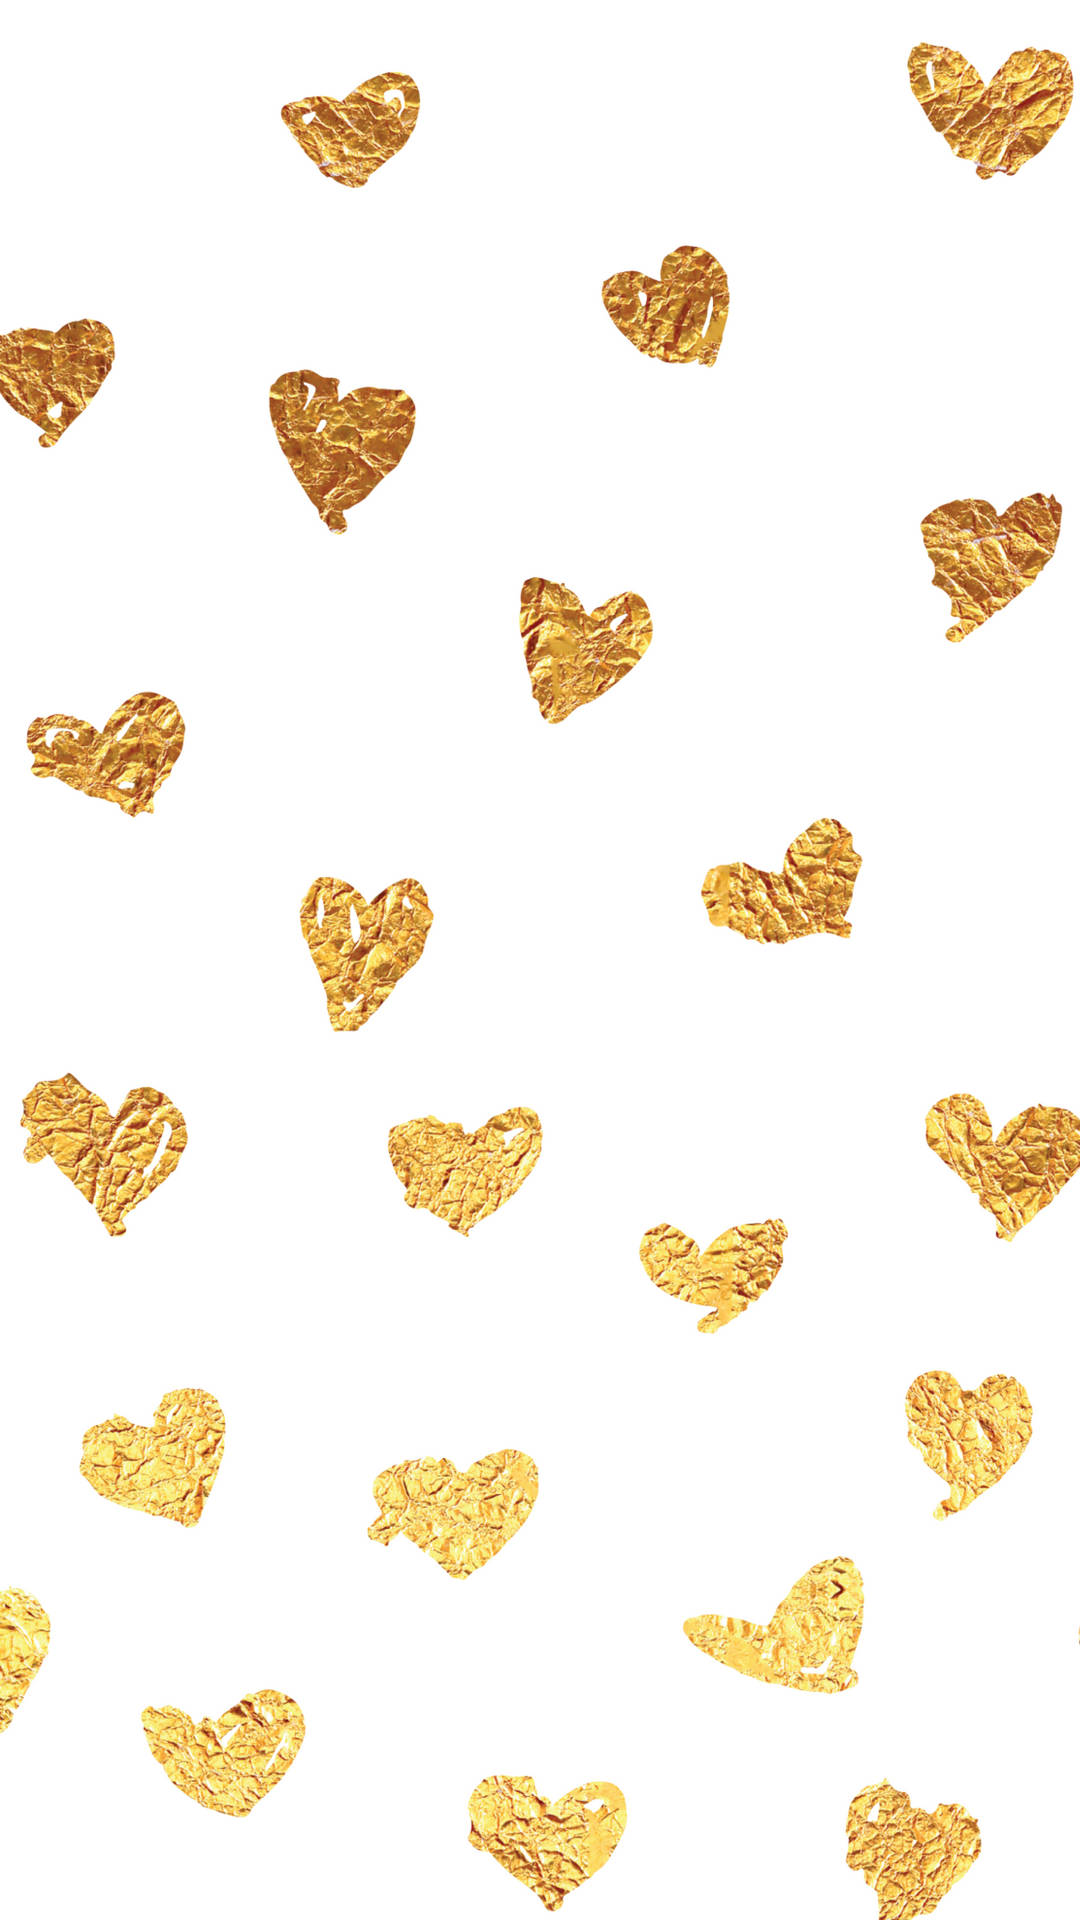 Gold Foil Hearts Background